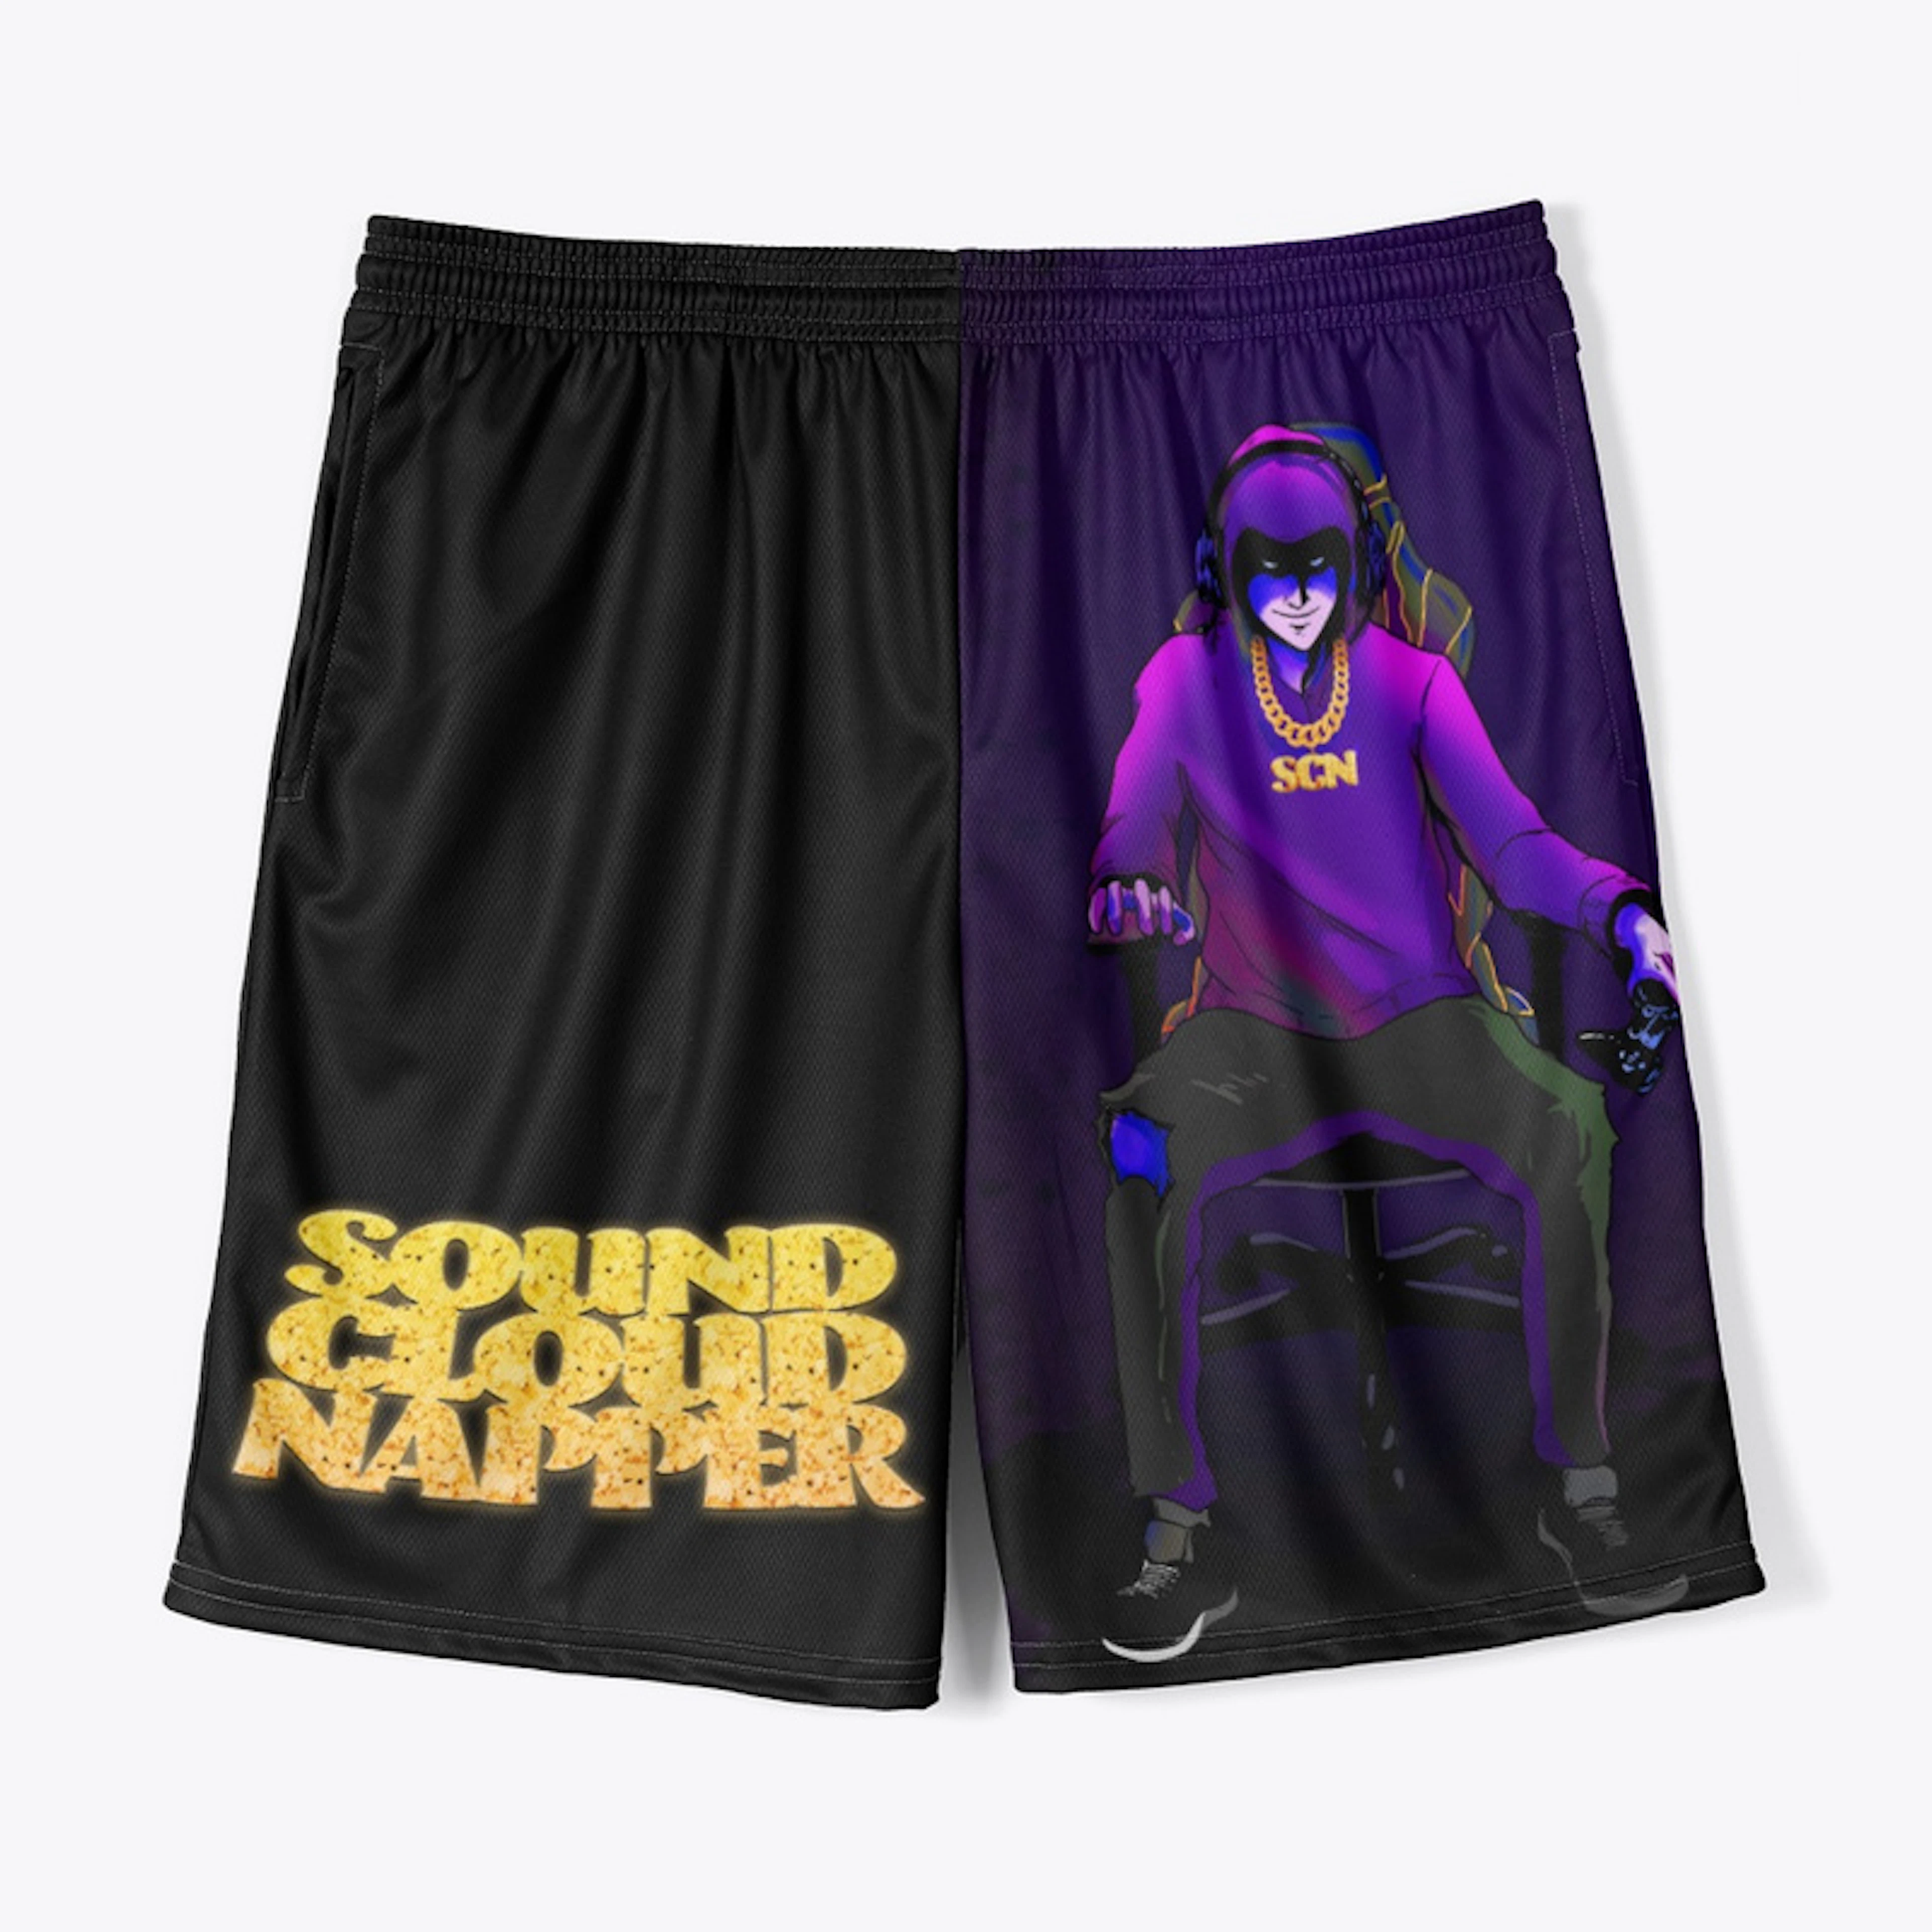 Soundcloudnapper Basketball Shorts